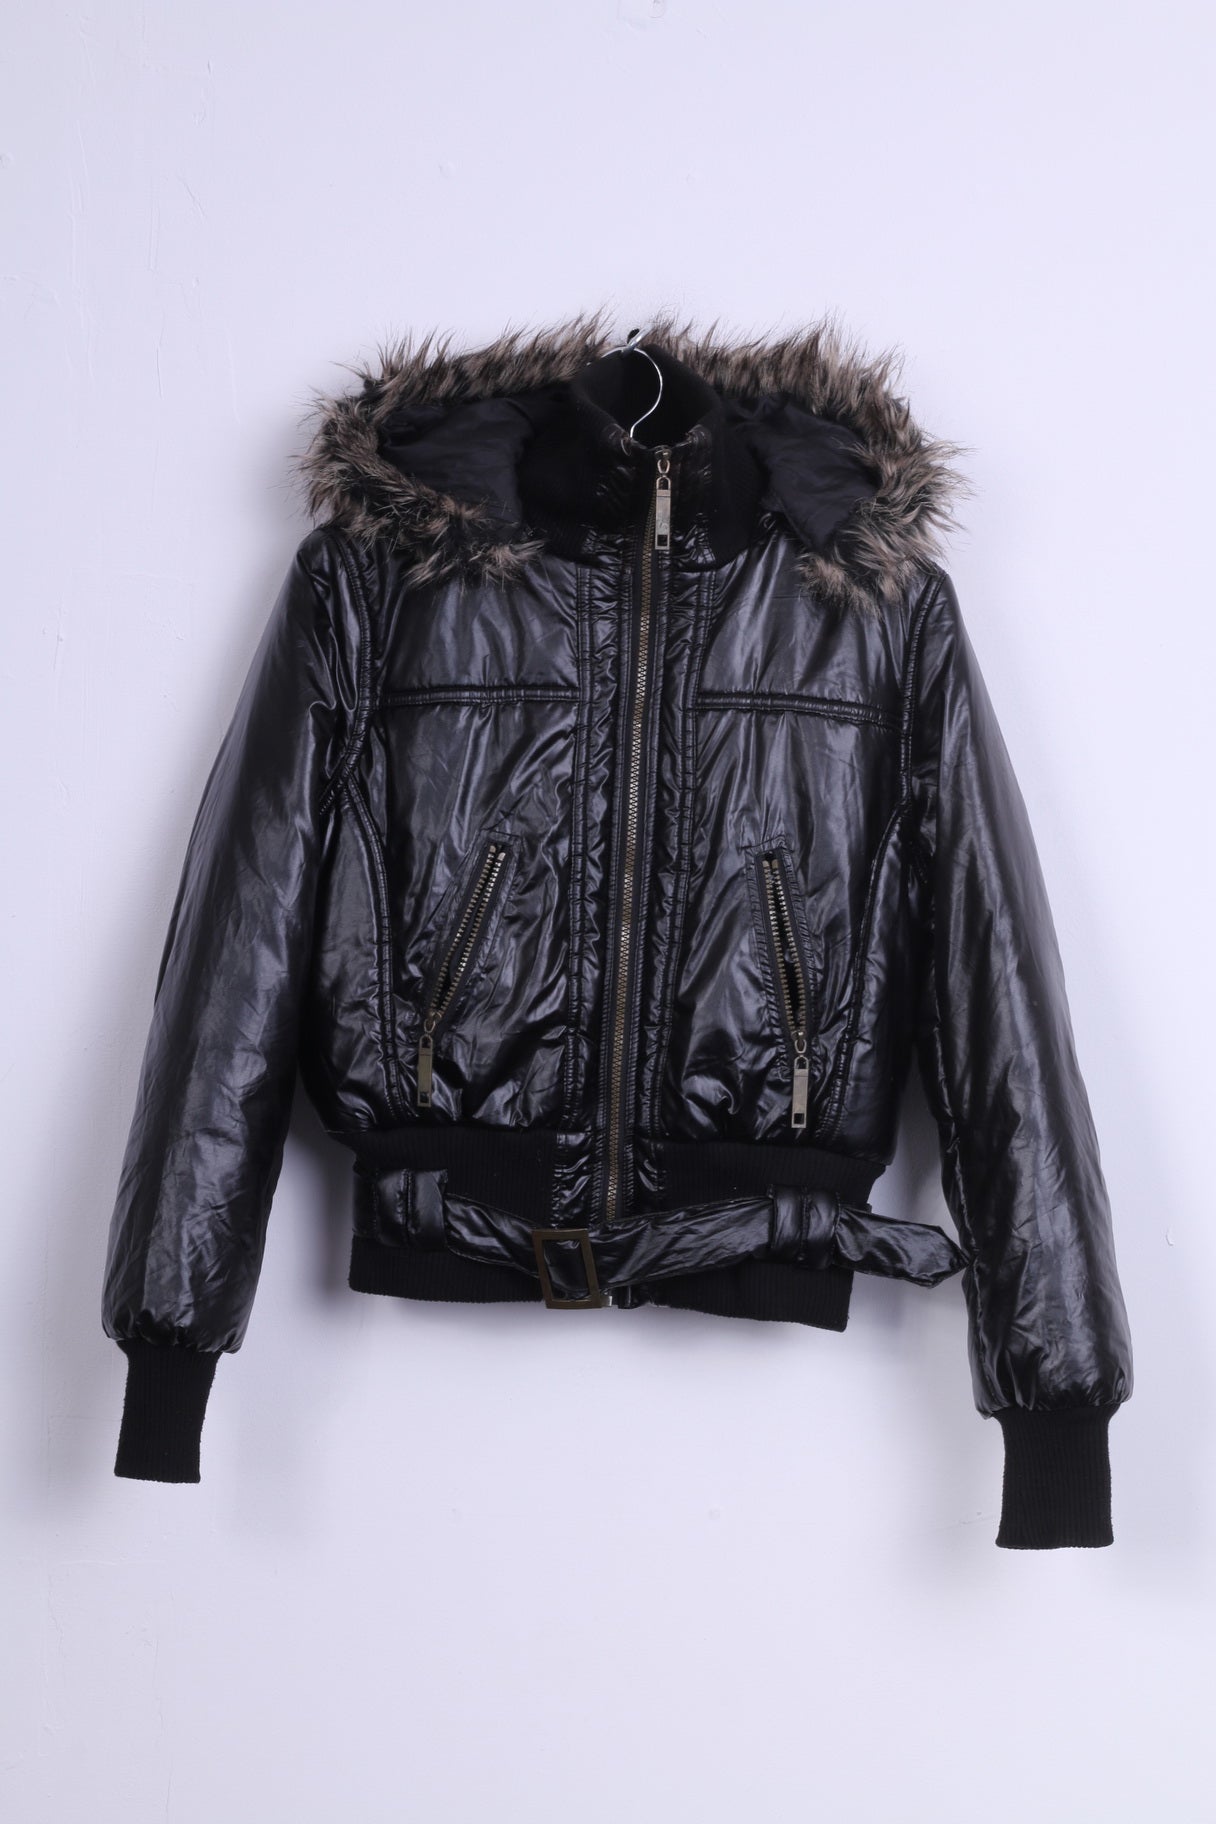 Ere Fashion Womens M Jacket Shiny Black Padded Hood Fur Biker Top